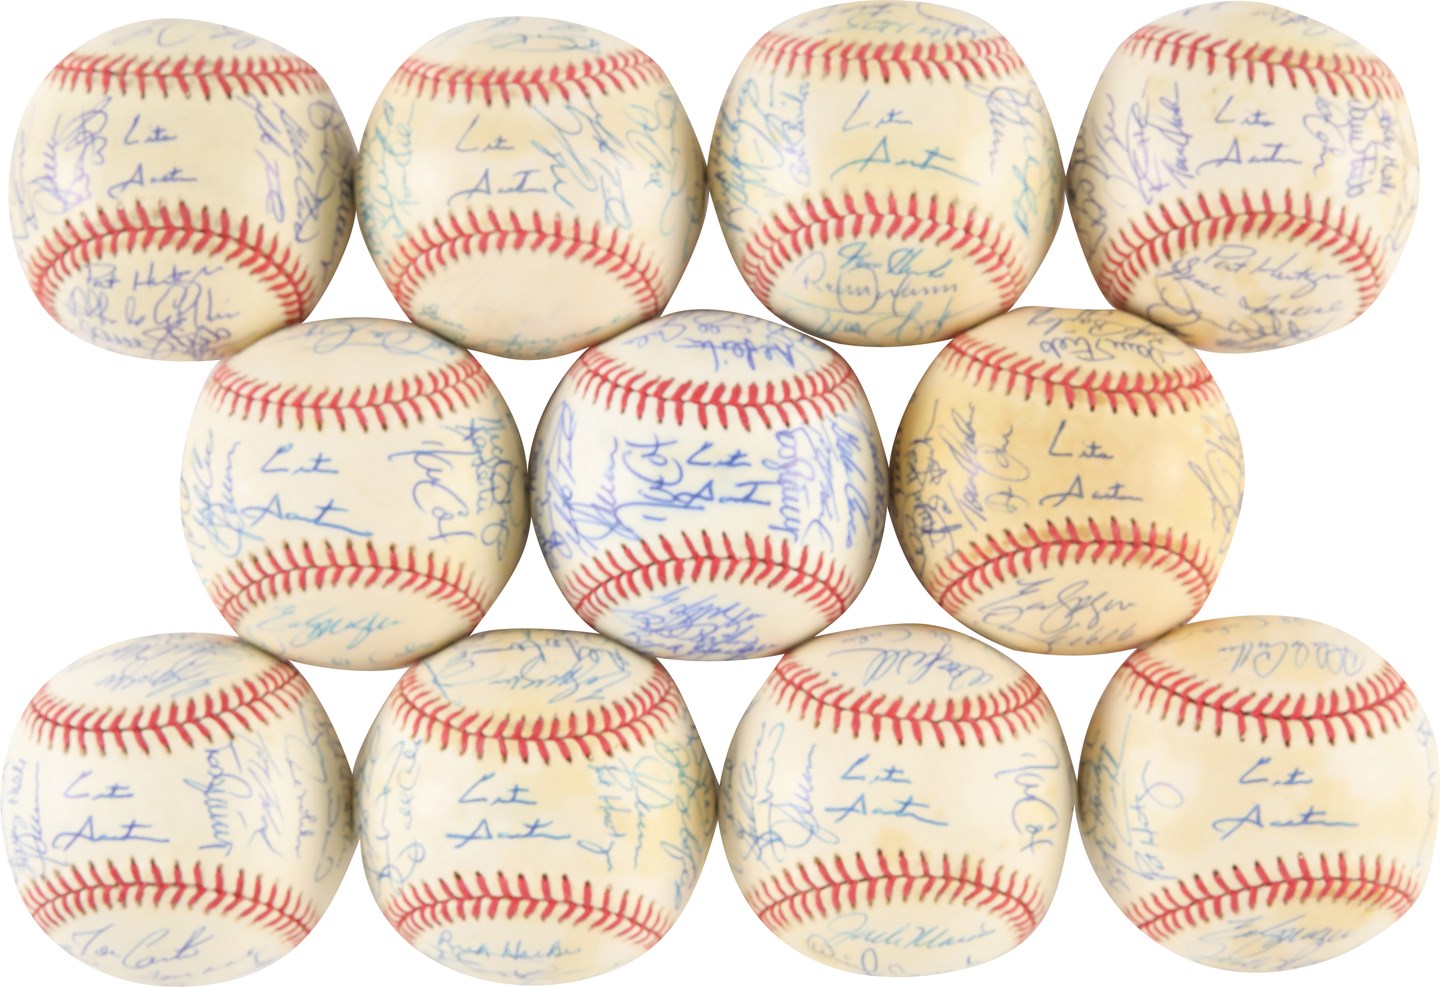 1992 & 1993 World Champion Blue Jays Team Signed Baseball Collection (19)